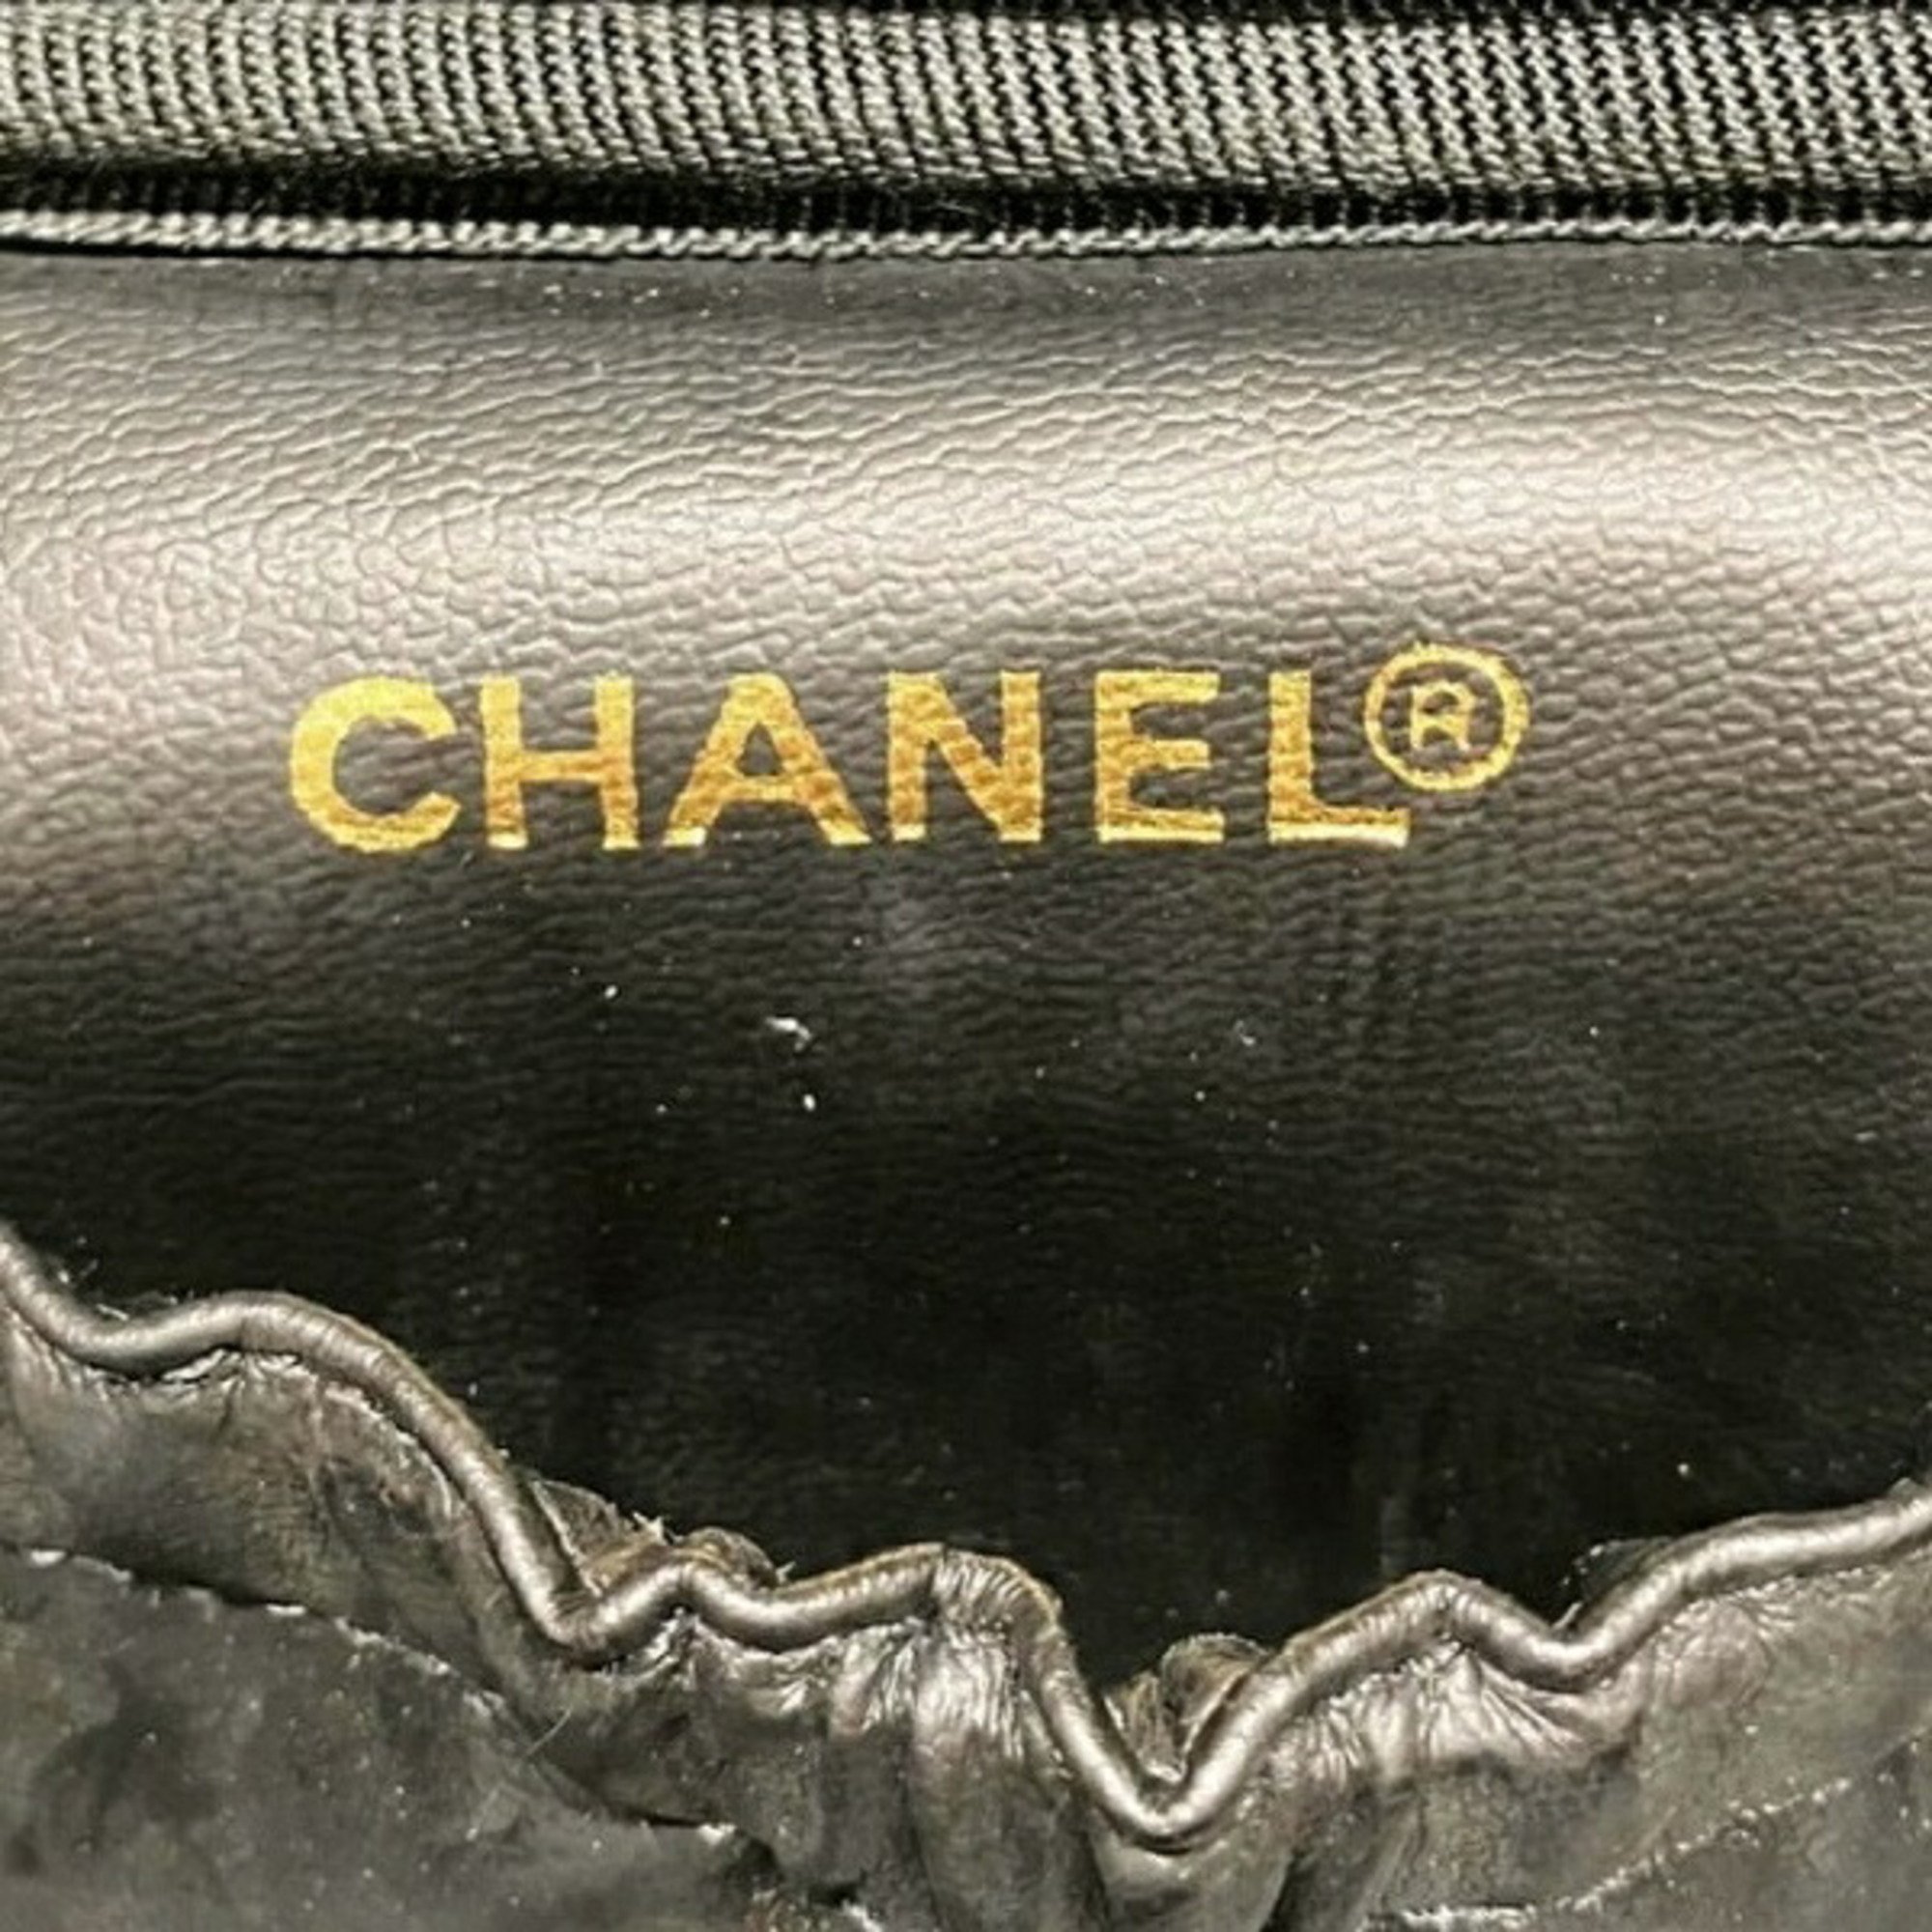 CHANEL Vanity Enamel Pouch Bag Handbag for Women